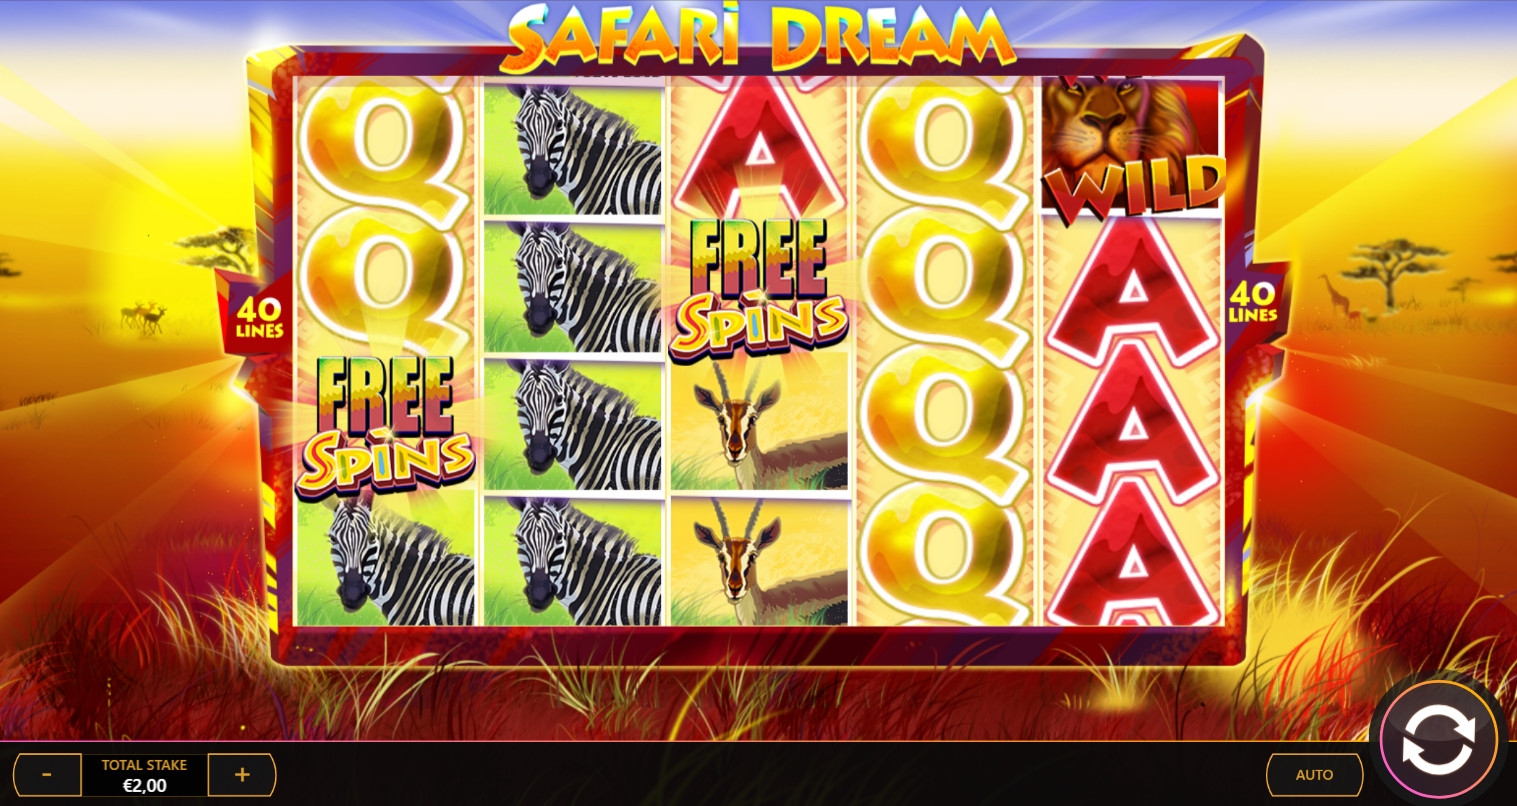 Safari Dream (Safari Dream) from category Slots